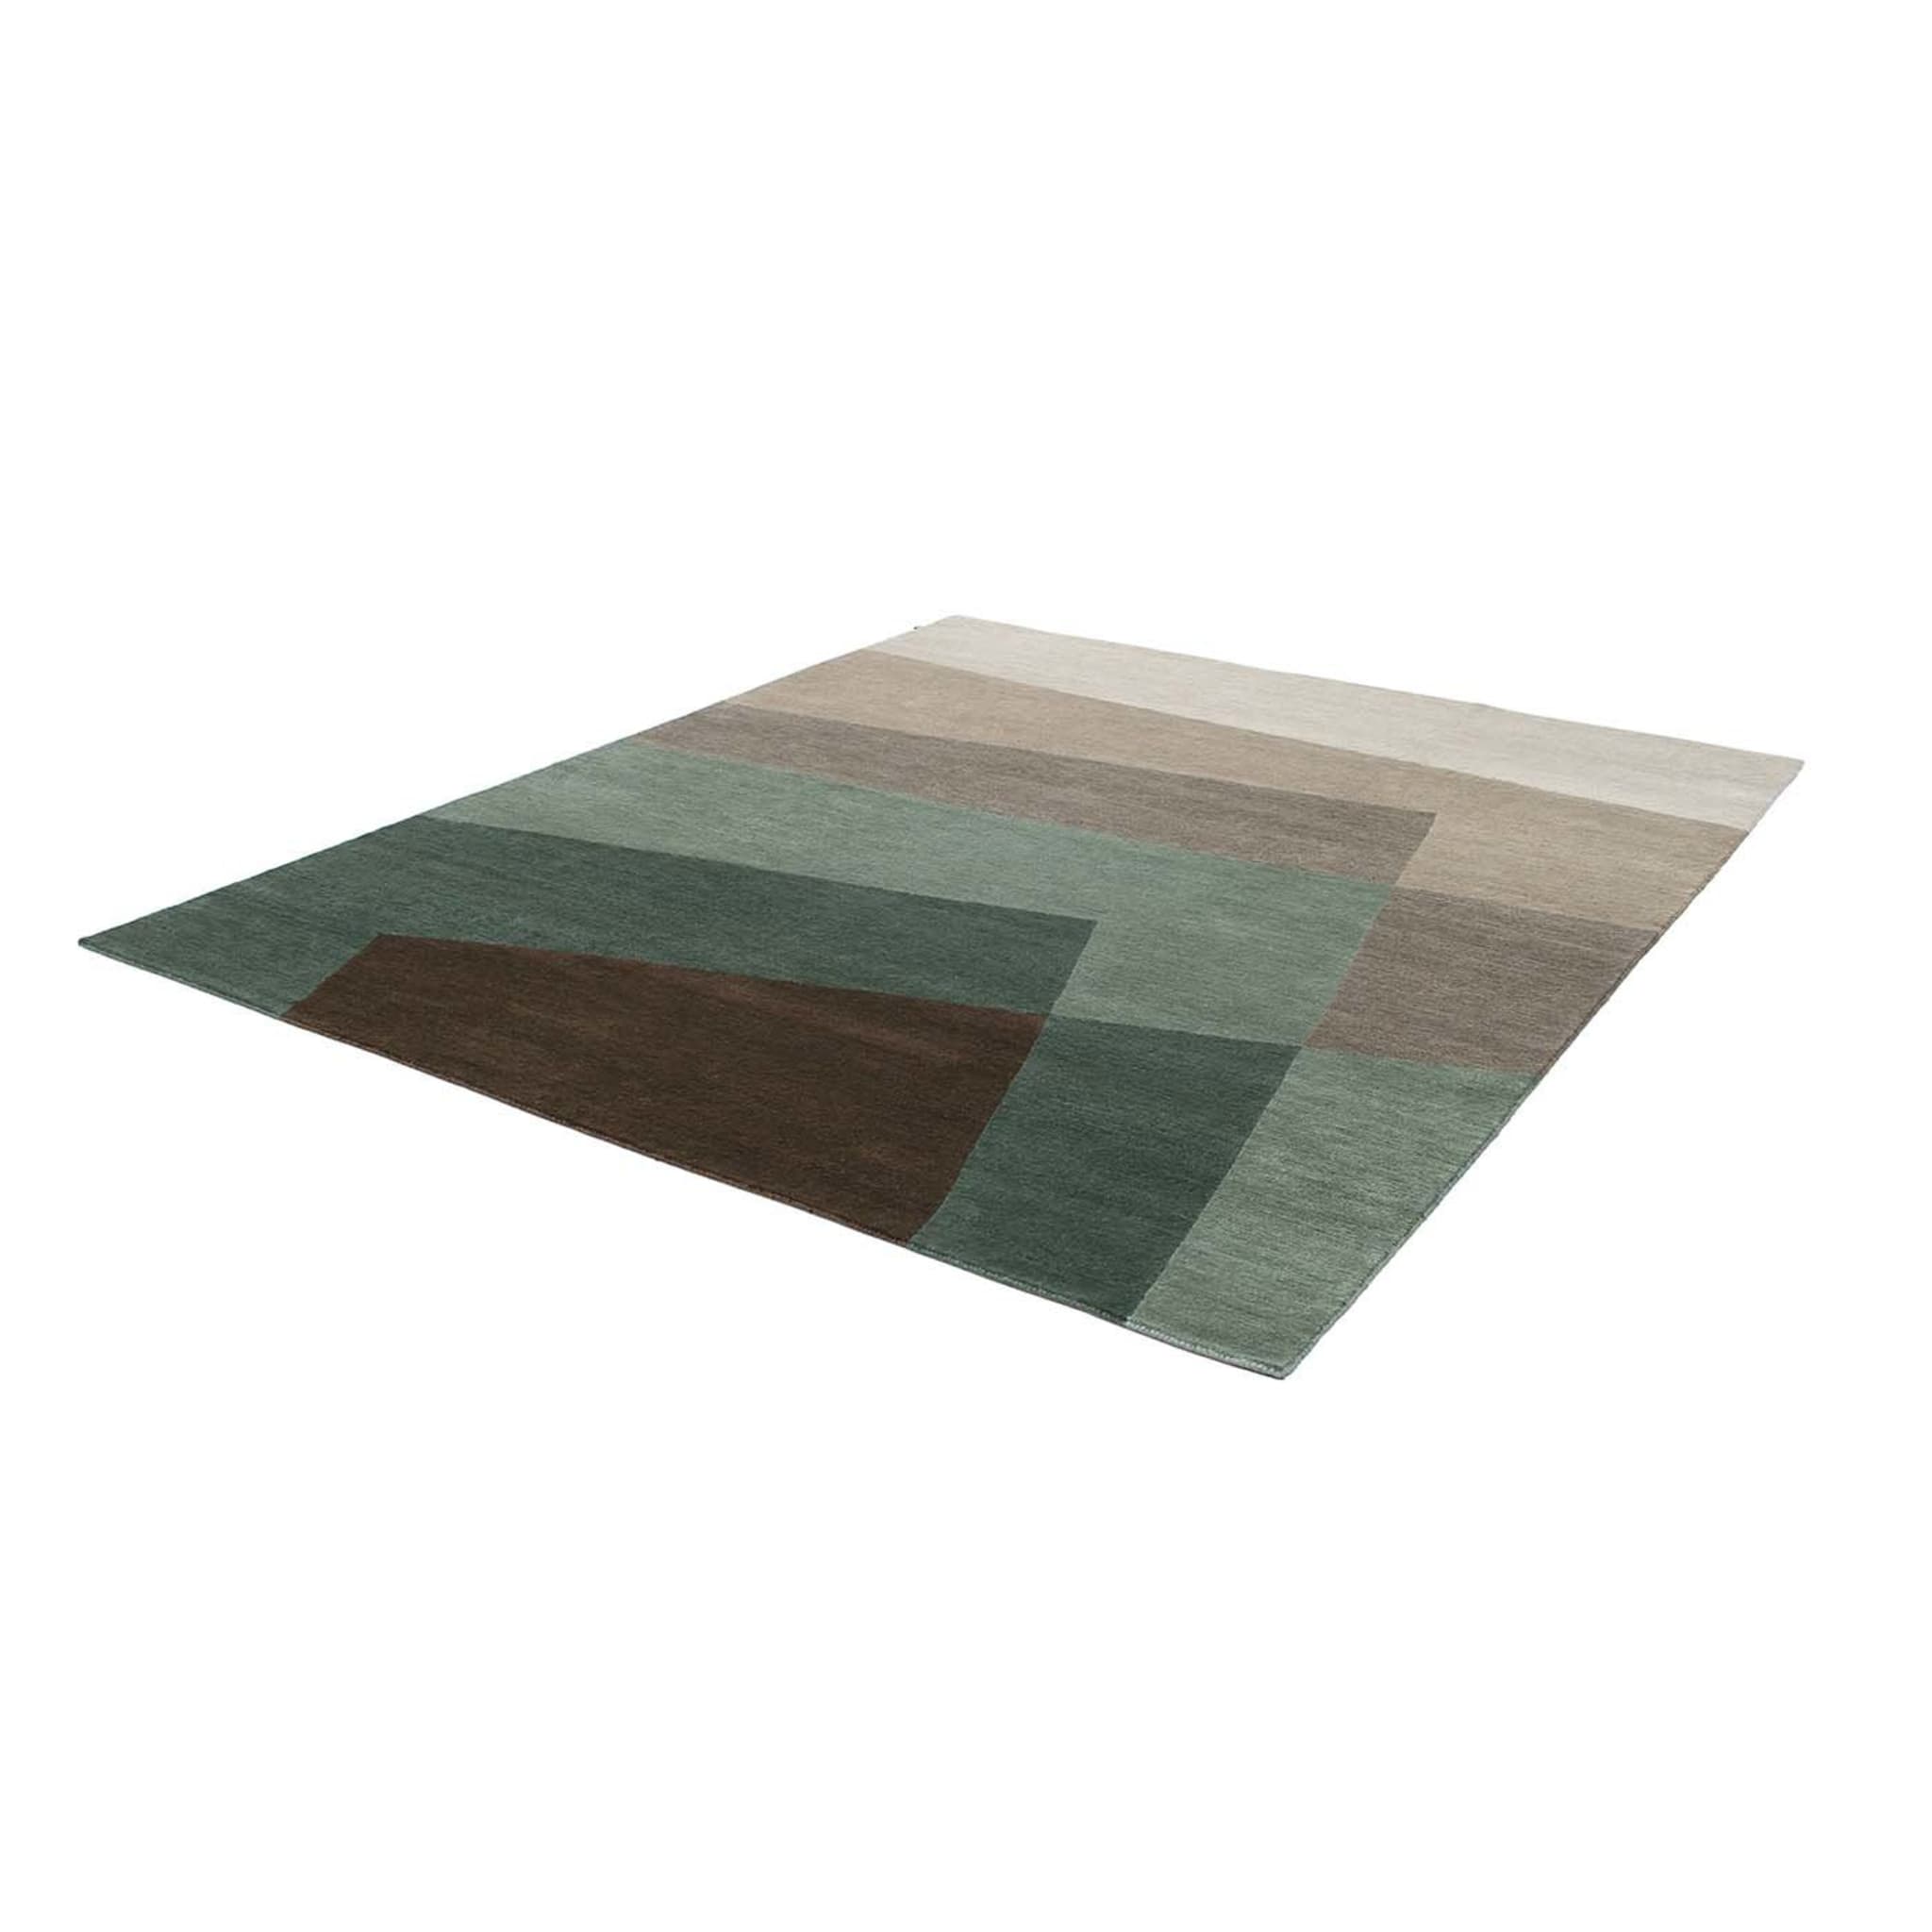 RD Shade Green Carpet by Rodolfo Dordoni - Alternative view 1